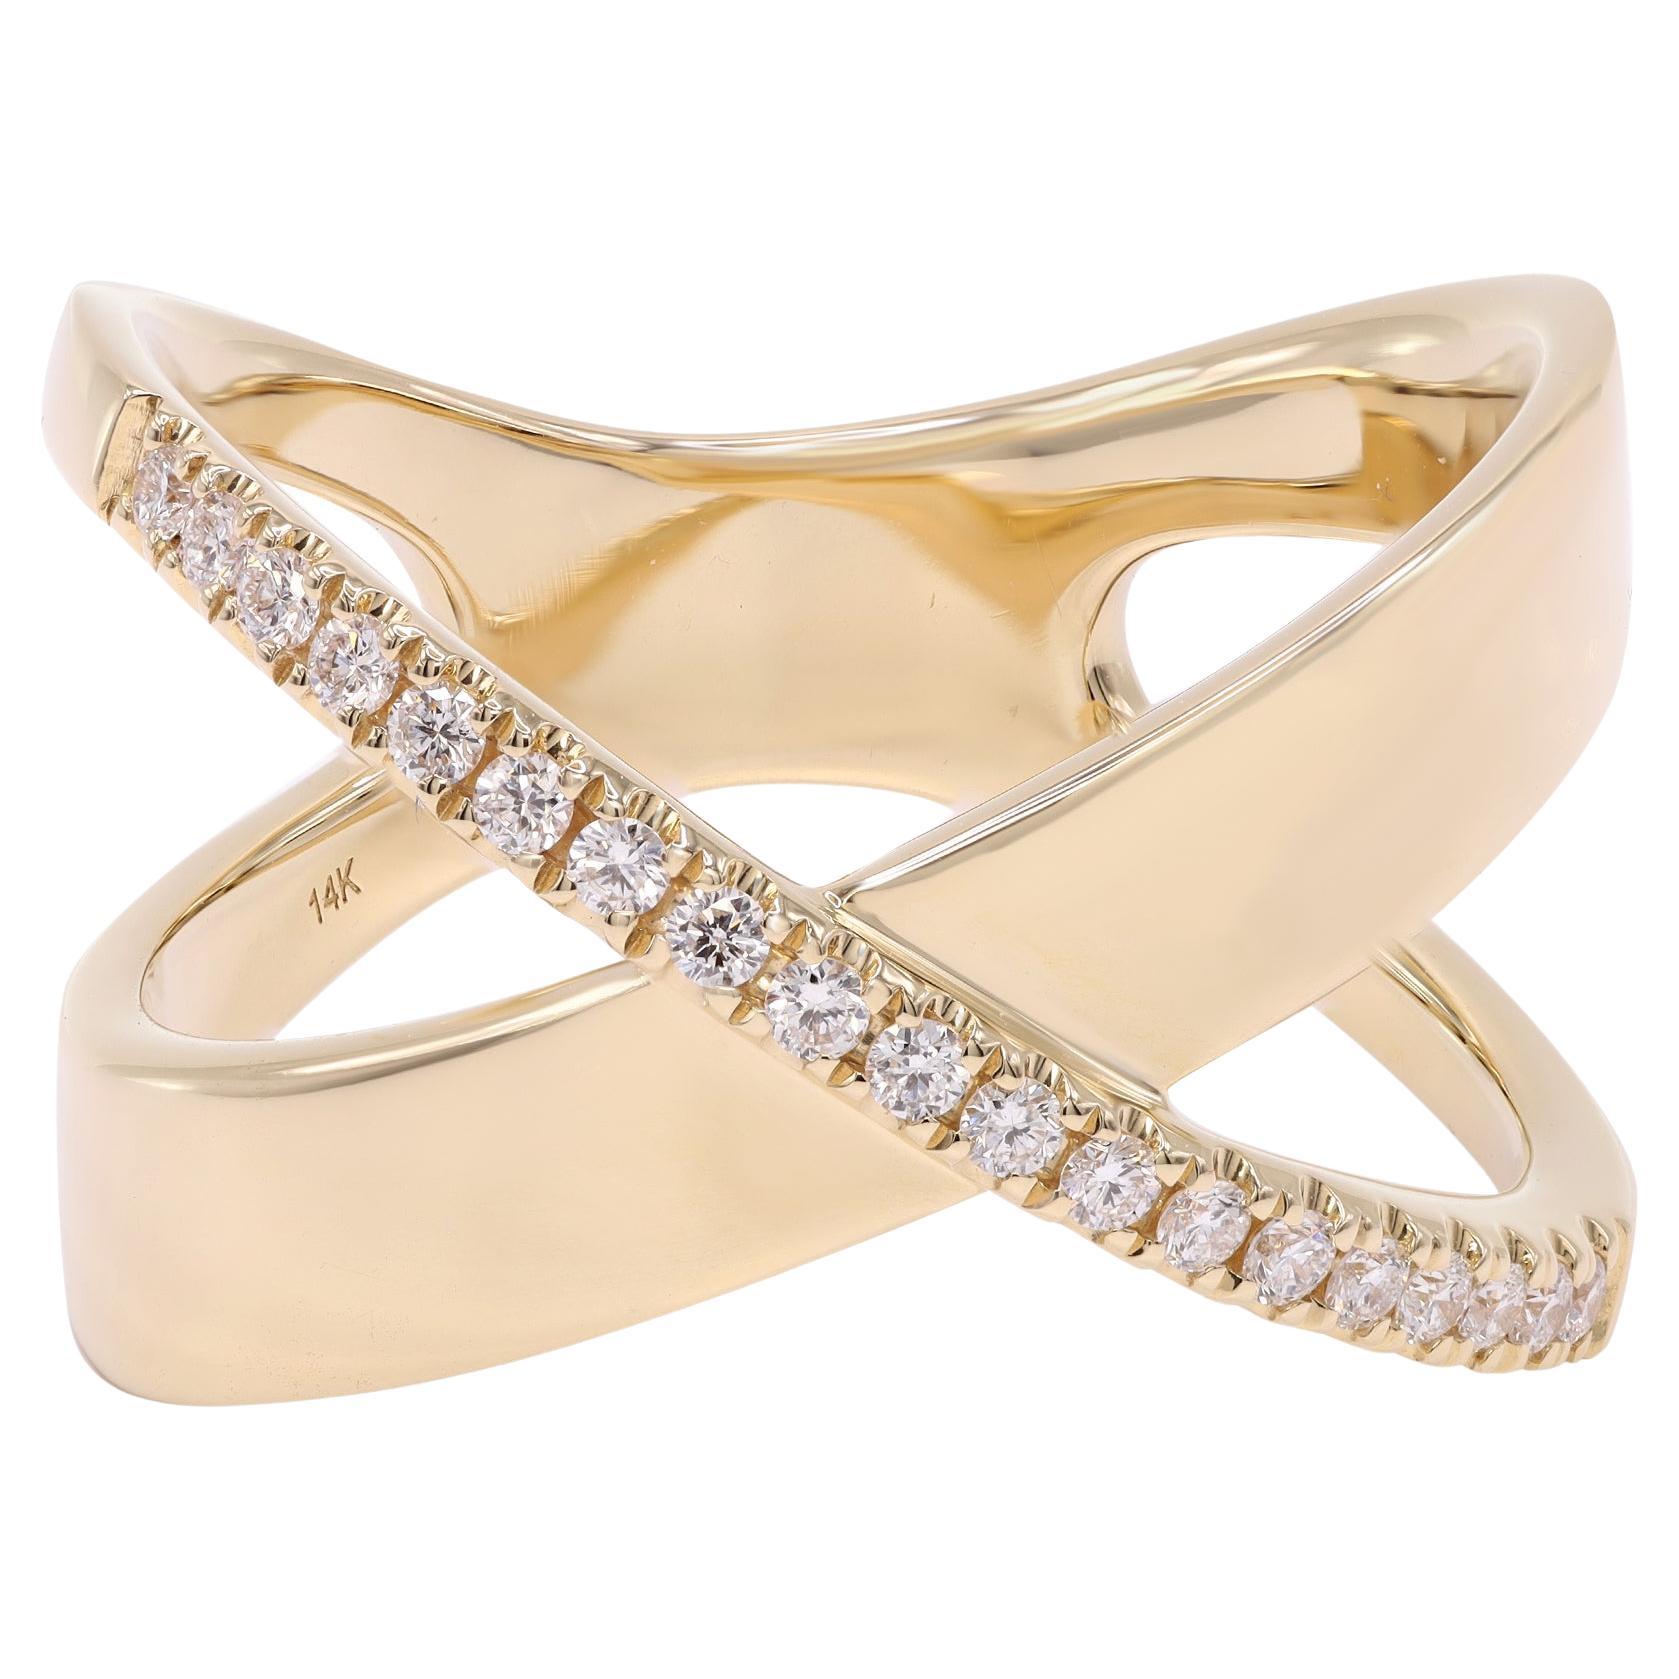 Rachel Koen Pave Diamond X Ring Band 14K Yellow Gold 0.19Cttw Size 7